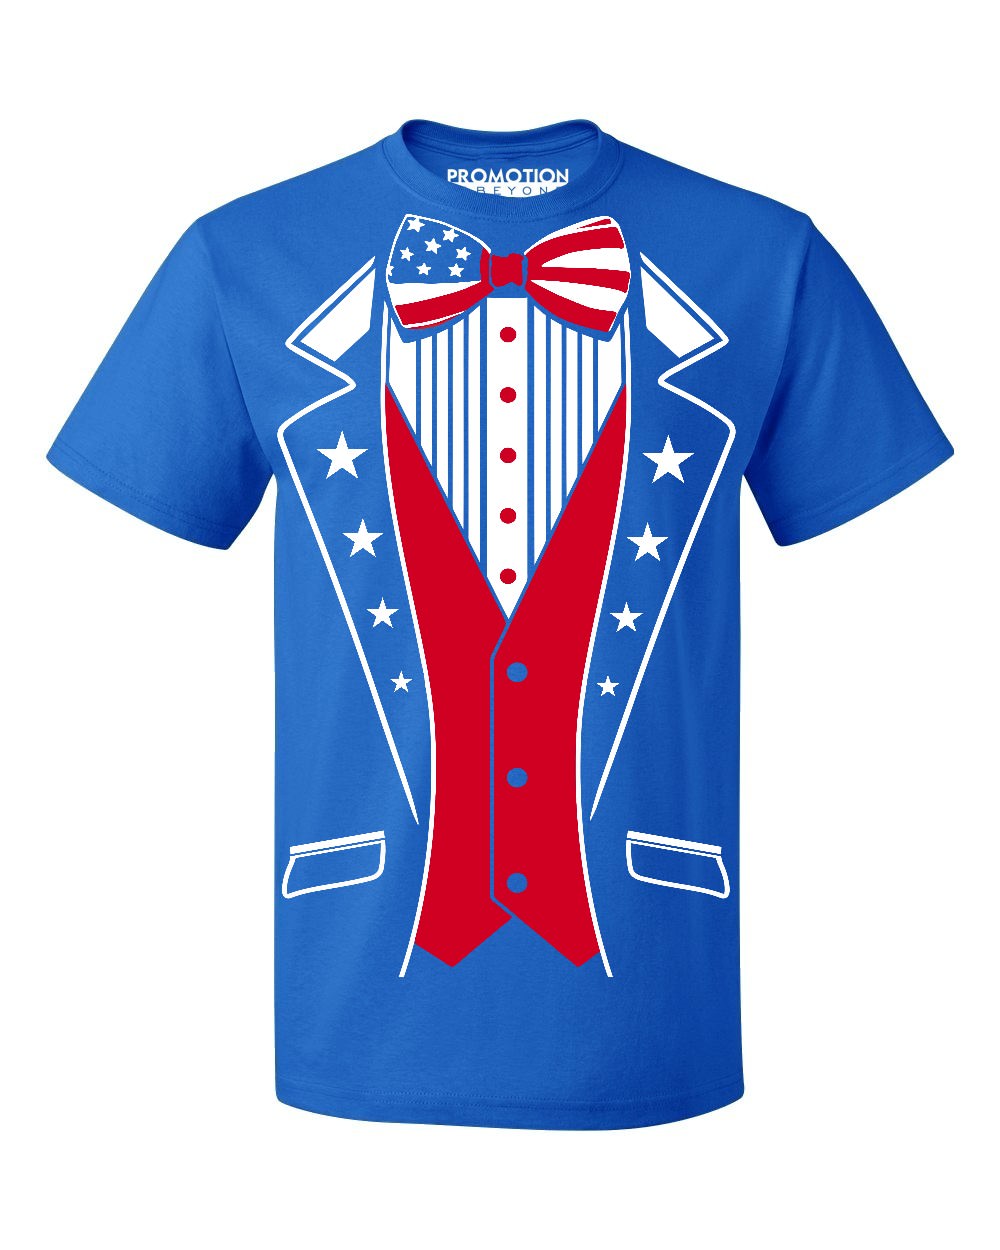 USA Tuxedo Patriotic 4th of July Men's T-shirt, L, Royal - image 1 of 2